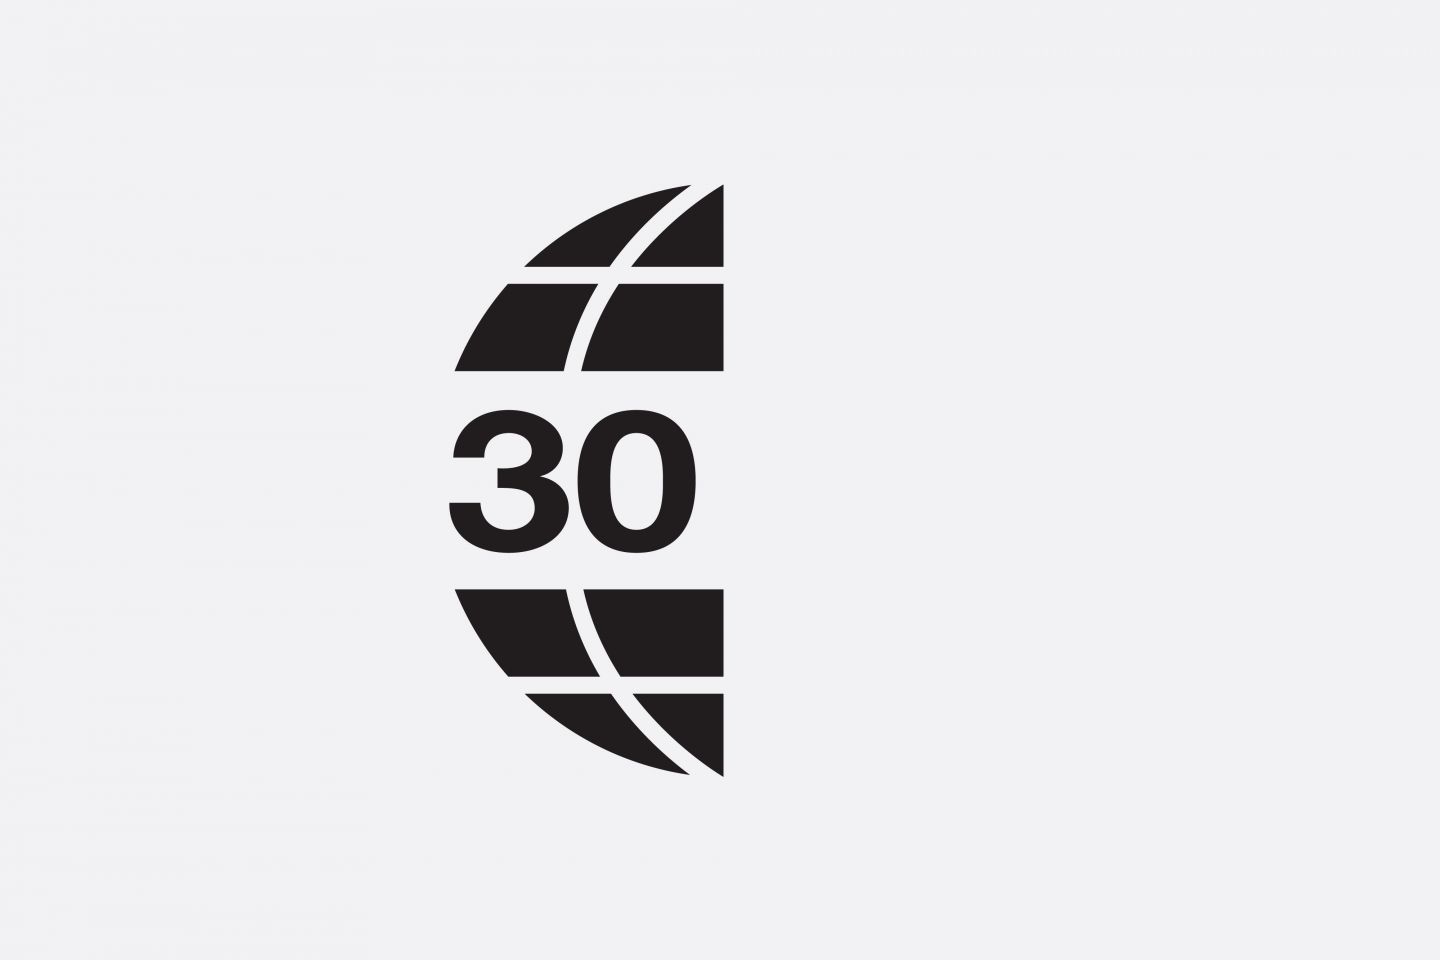 30 years of networking – Swift